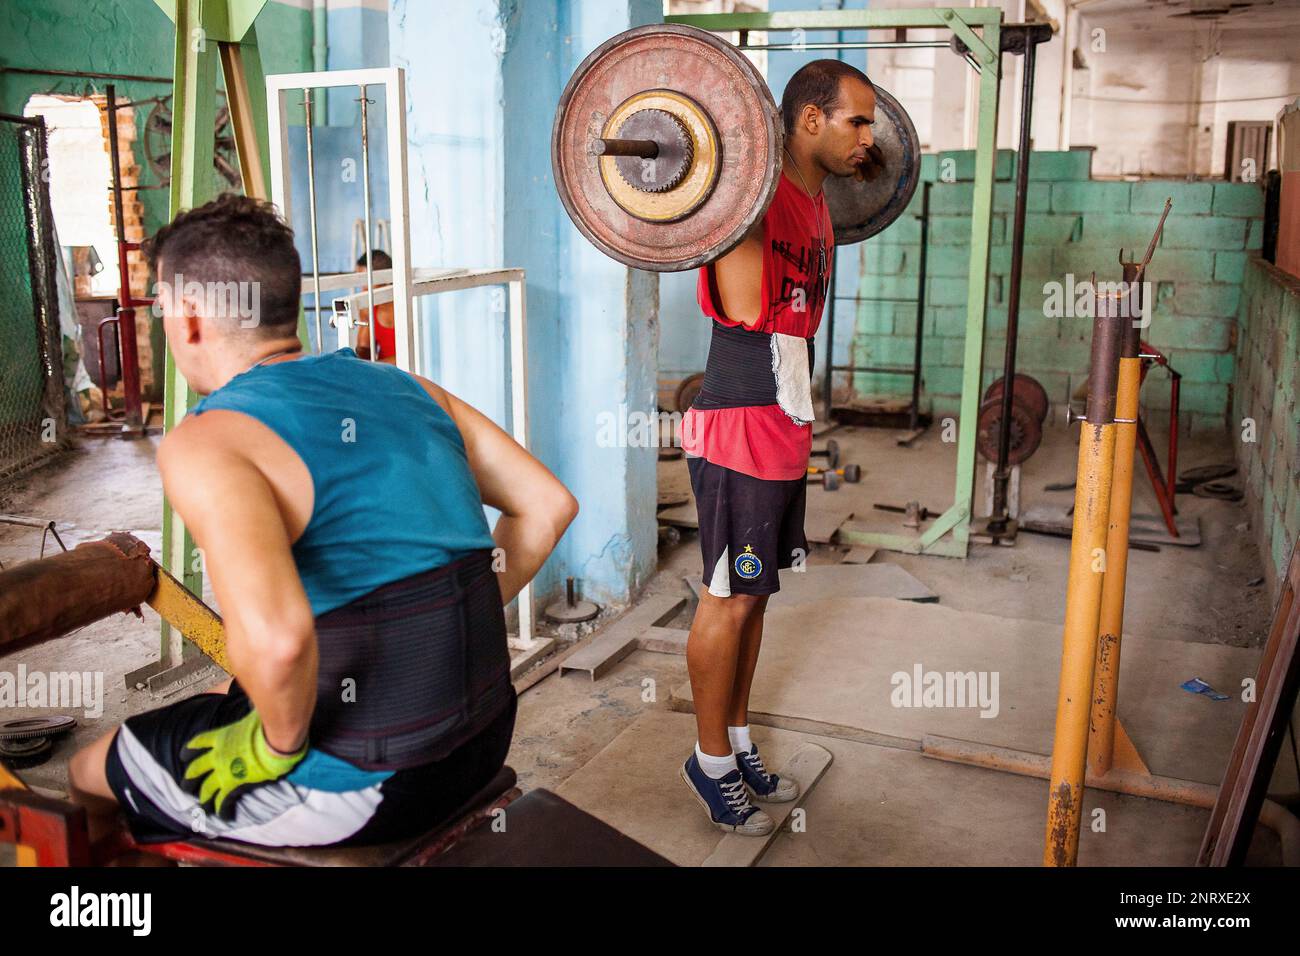 A Cuban men does exercise at a bodybuilding gym, in San Rafael street, Centro Habana, La Habana, Cuba Stock Photo